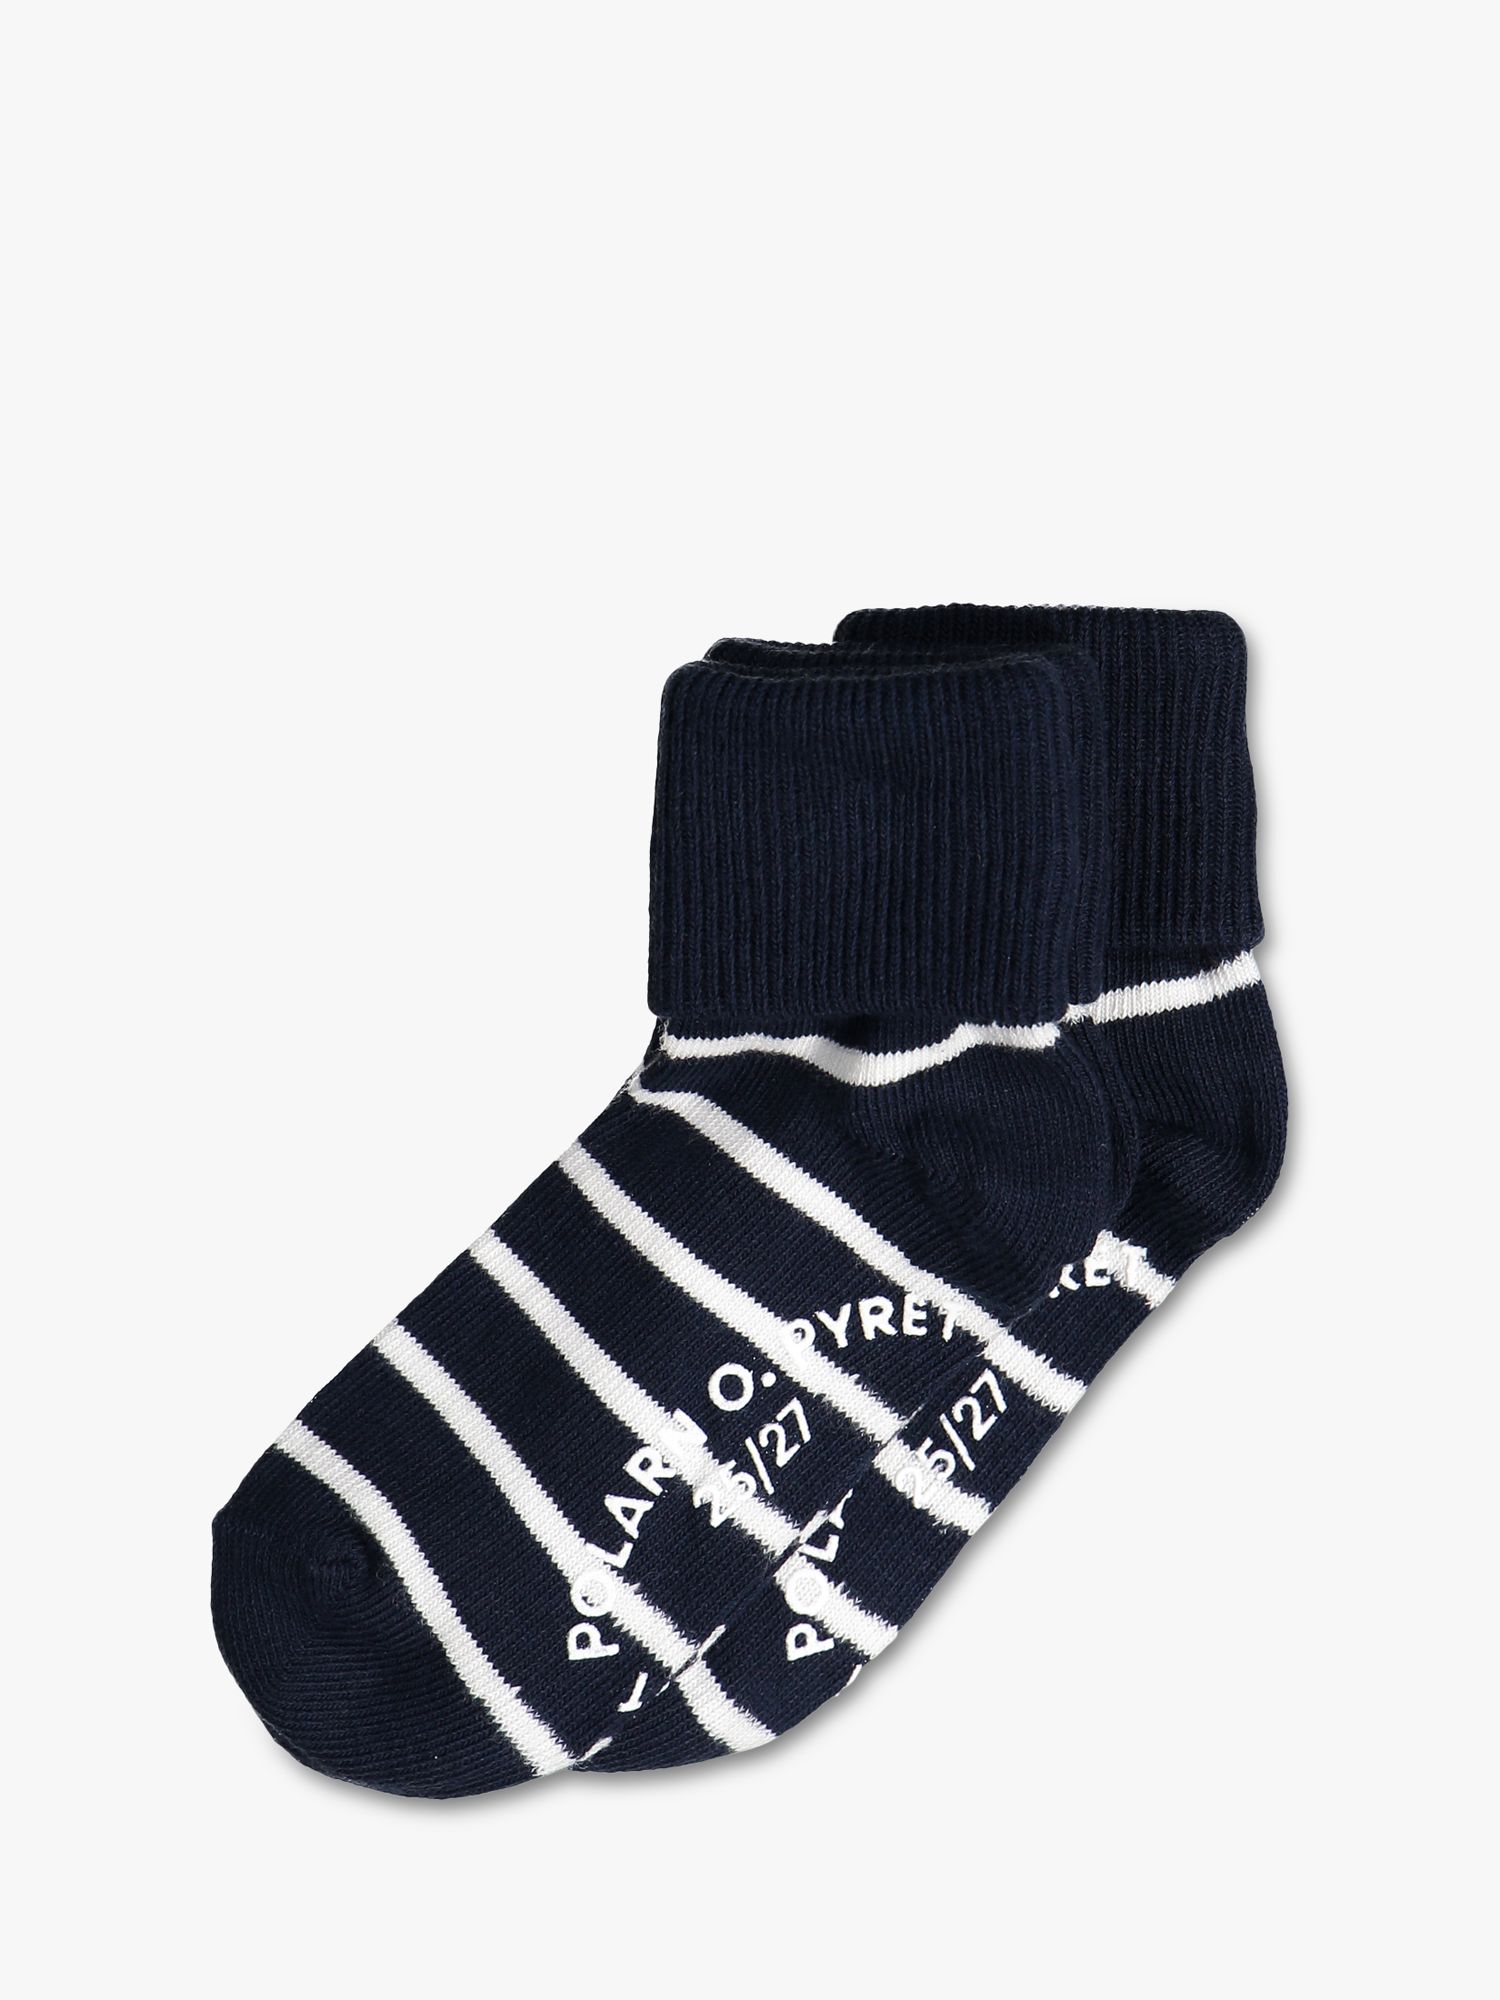 Polarn O. Pyret Kids' Anti-Slip Stripe Socks, Pack of 2, Blue, 2-4 years